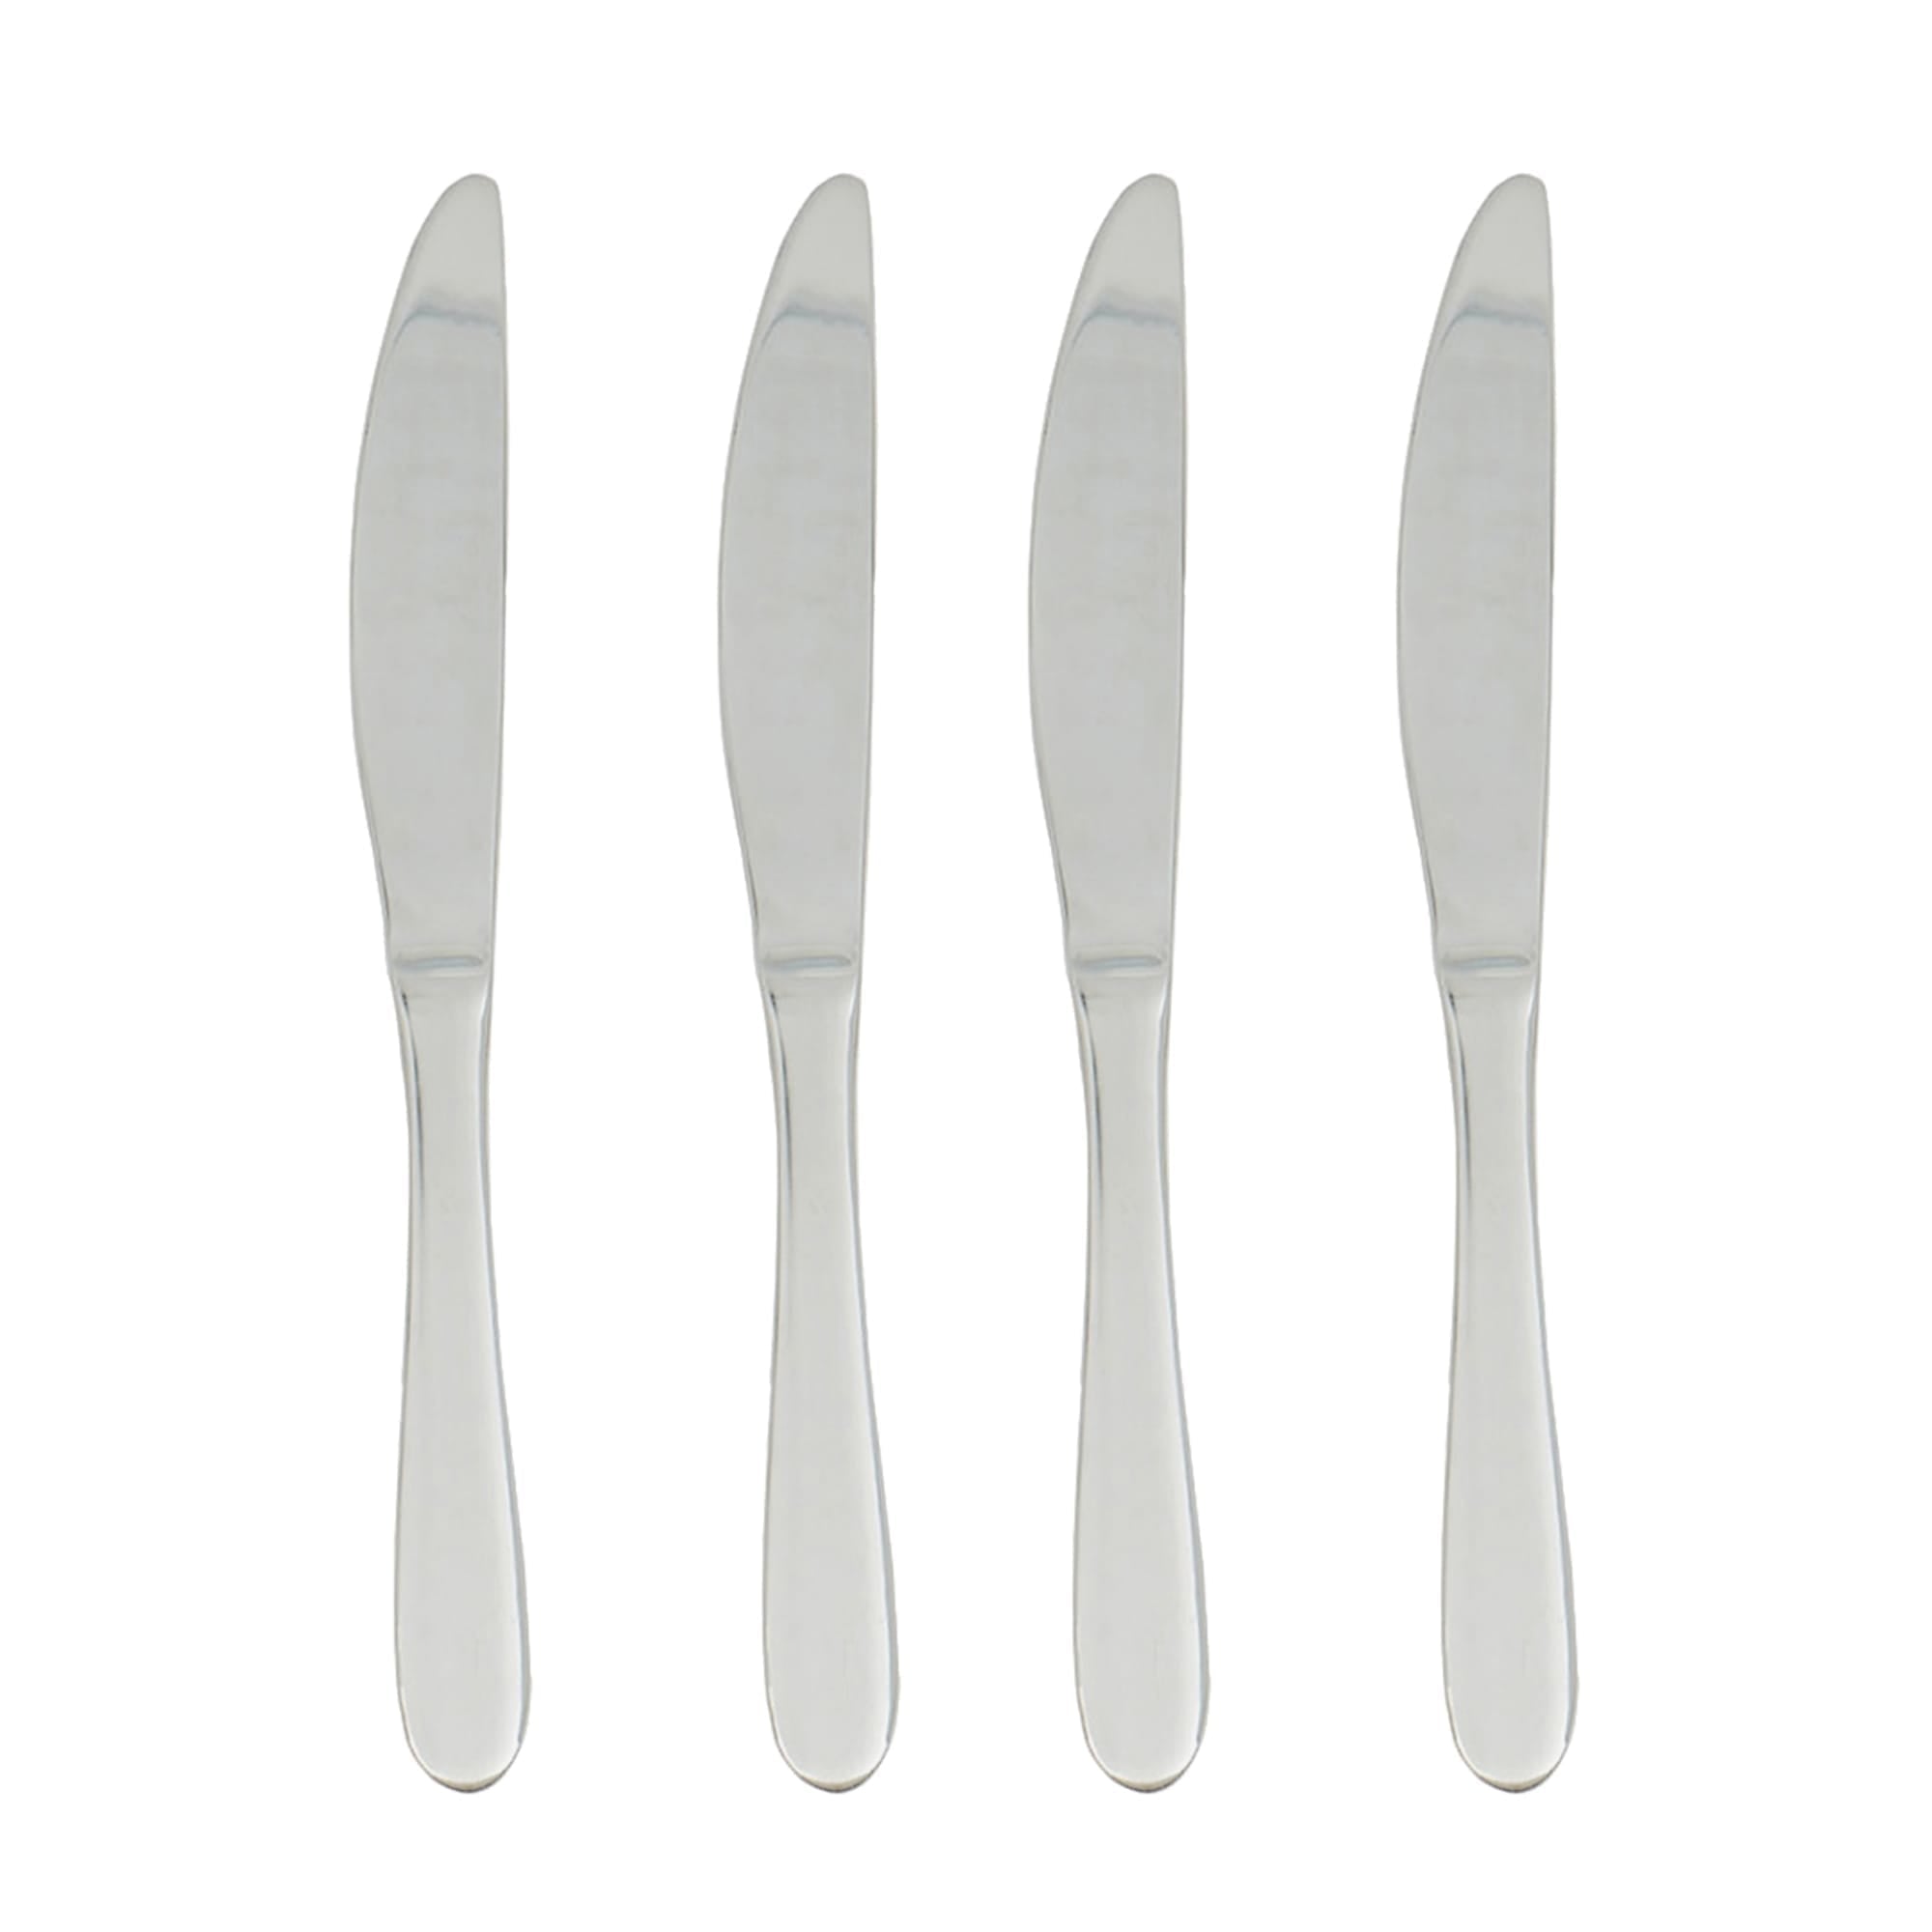 Silver 4-Piece Dinner Knife Set - Stainless Steel Flatware Dinner Utensils, Essential Kitchen Cutlery Set, Dishwasher Safe $2.00 EACH, CASE PACK OF 24